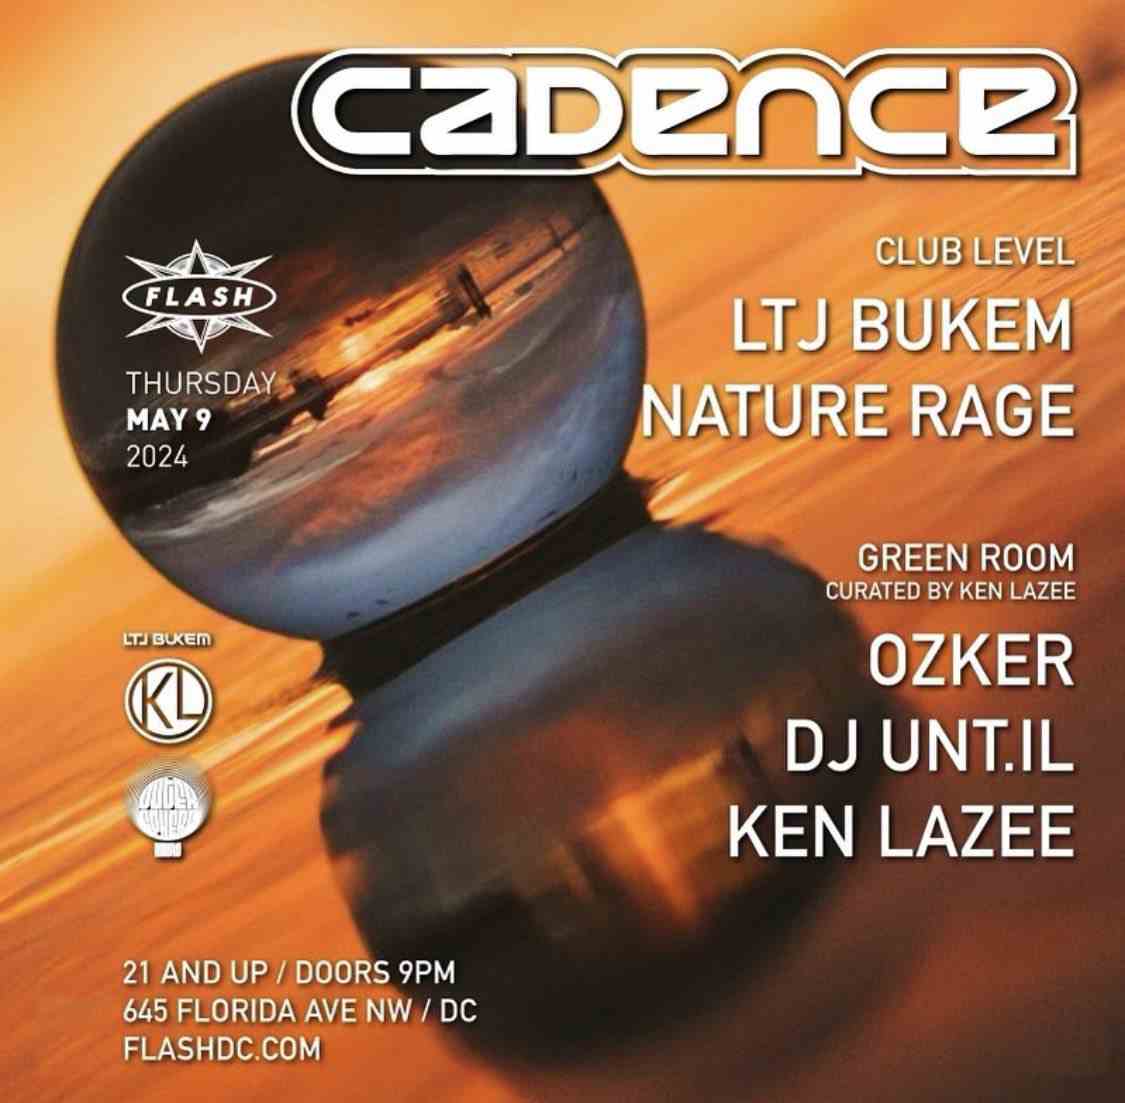 Cadence Presents LTJ Bukem event flyer